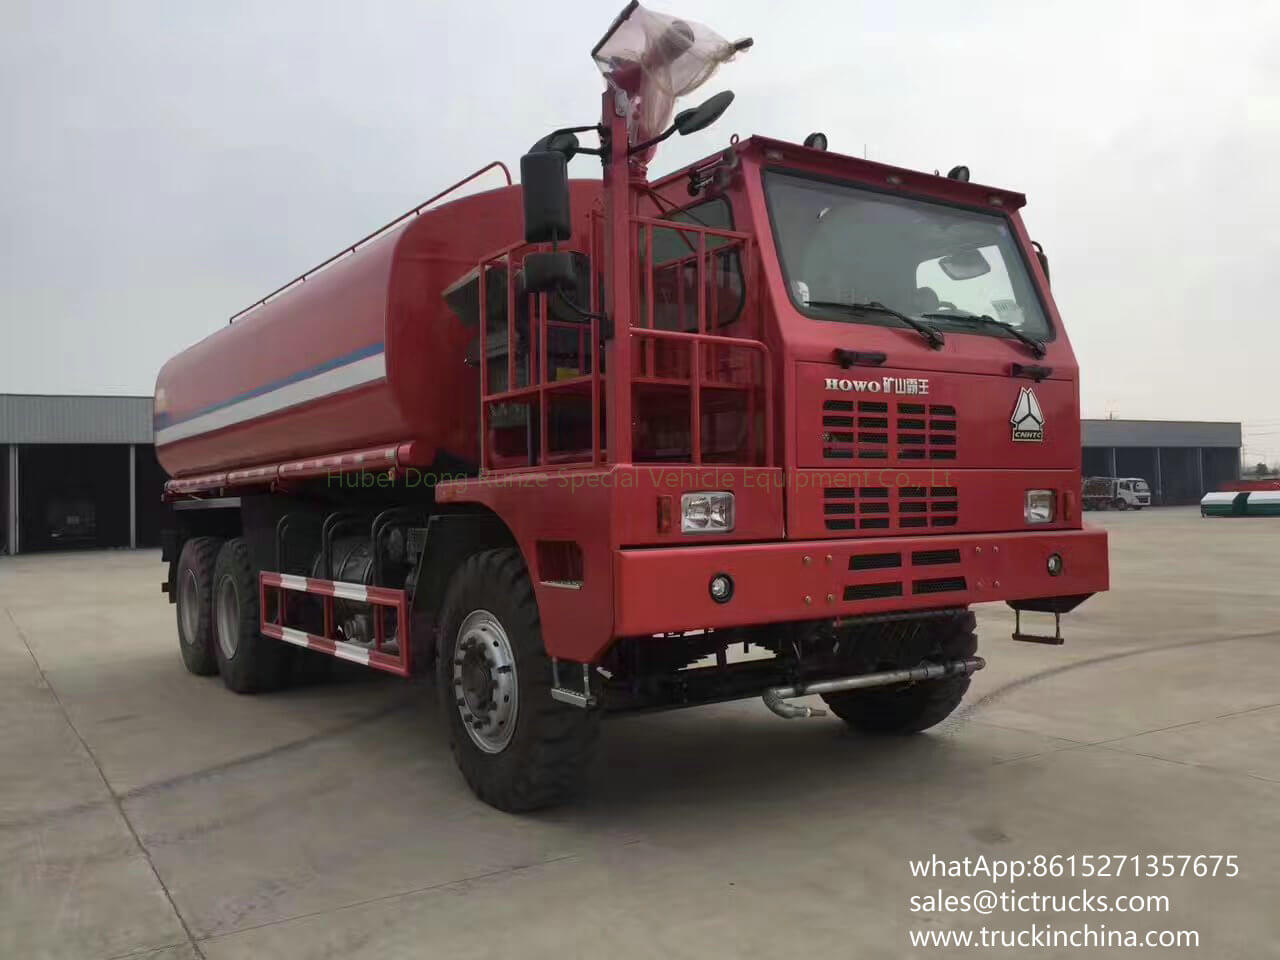 Sino truck Mine 40000L Water tank Truck with water pump cannon 60L/s